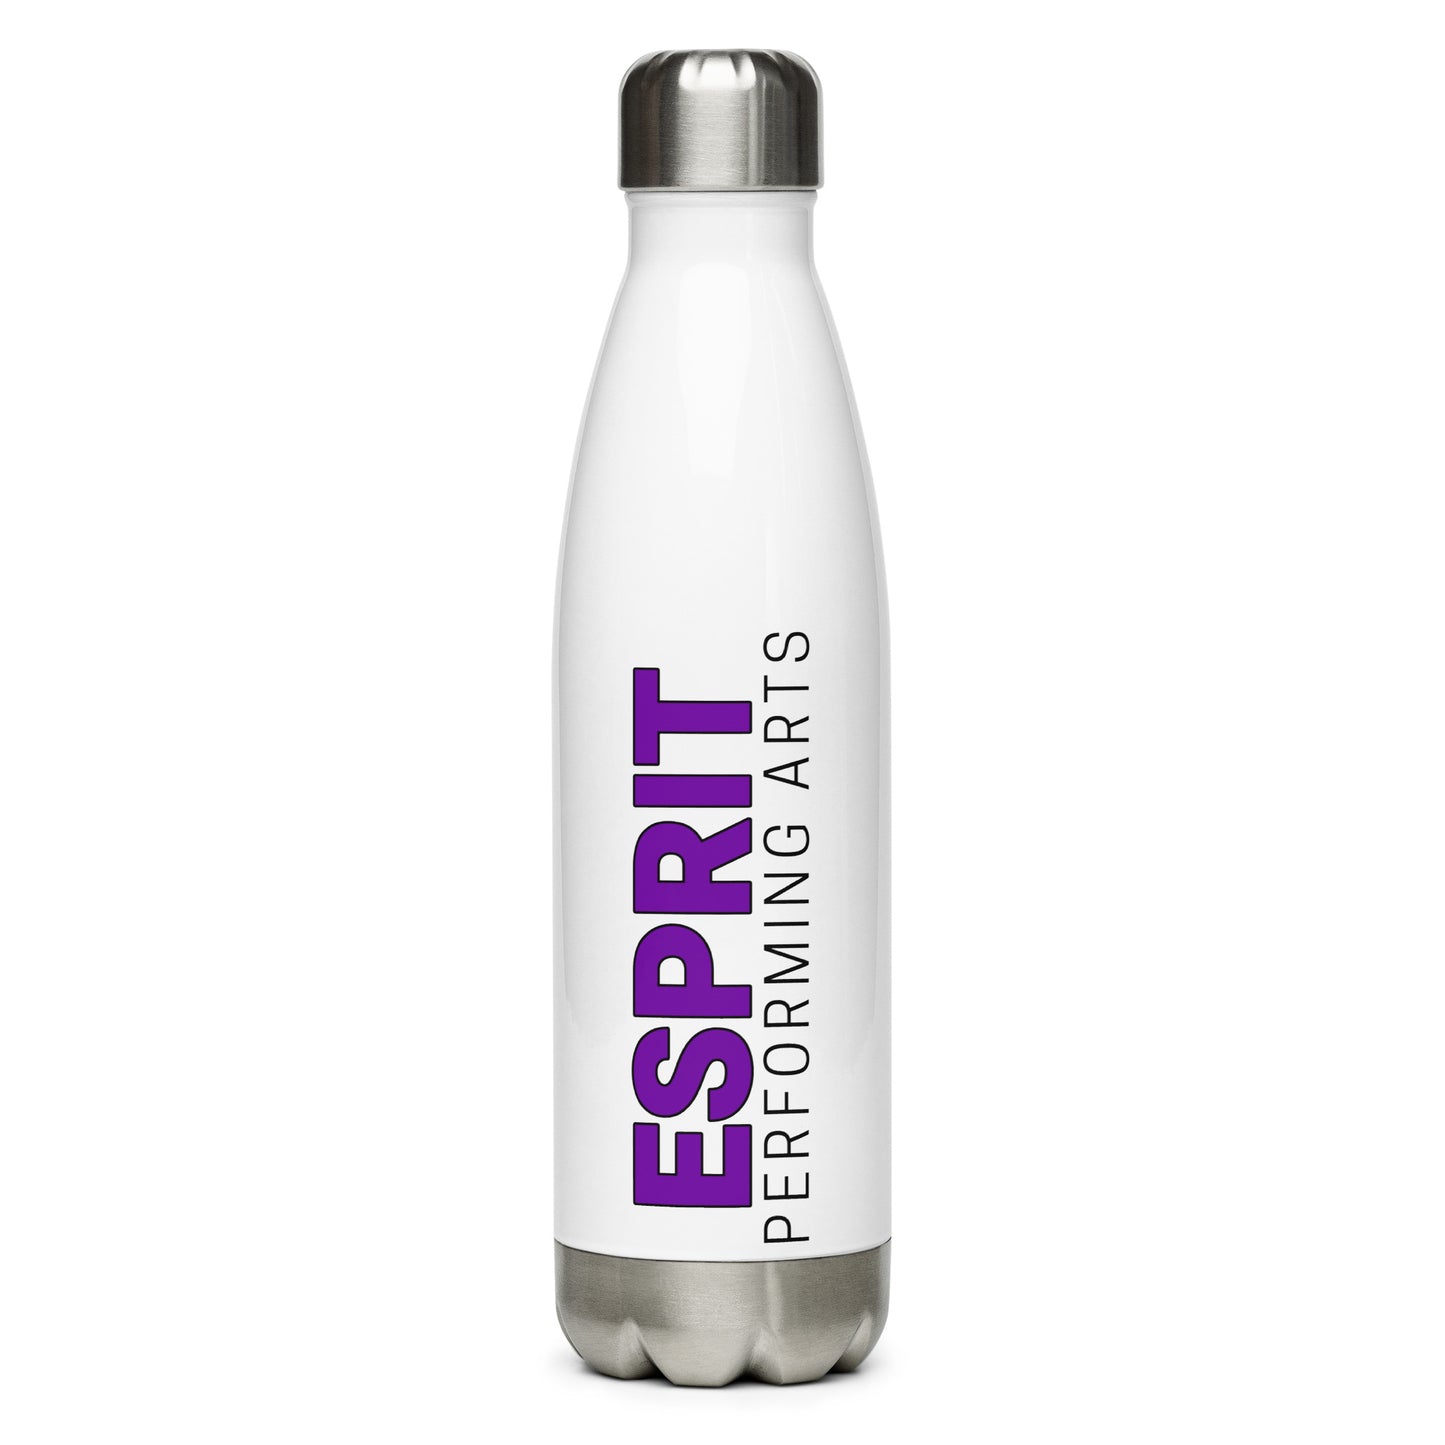 Esprit Performing Arts Stainless Steel Water Bottle